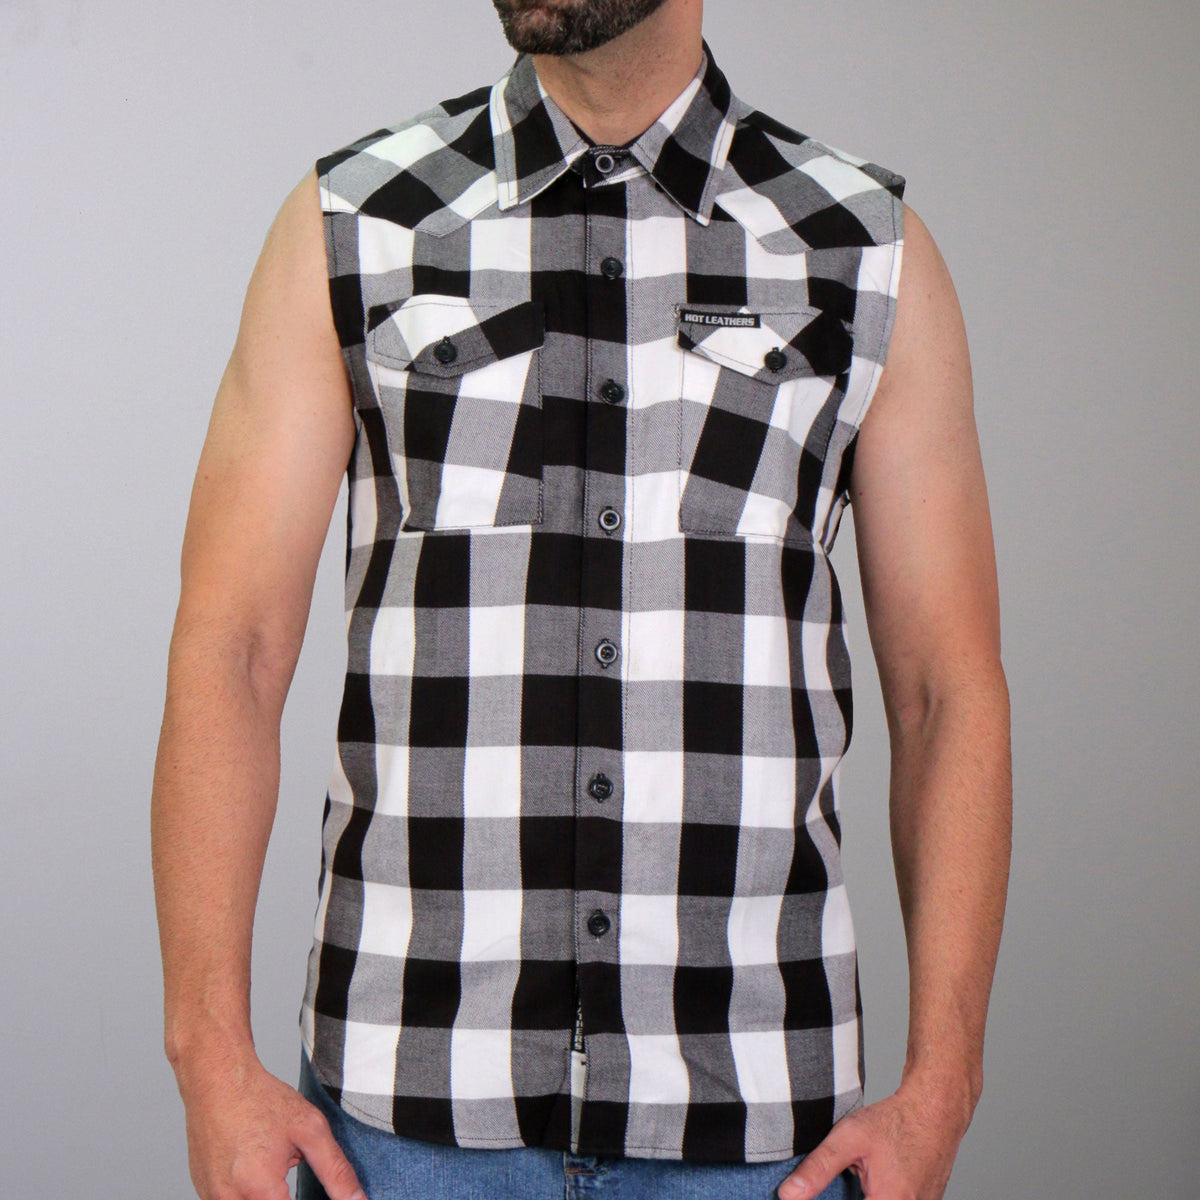 Hot Leathers FLM5004 Men?ÇÖs Black and White Sleeveless Cotton Flannel Shirt